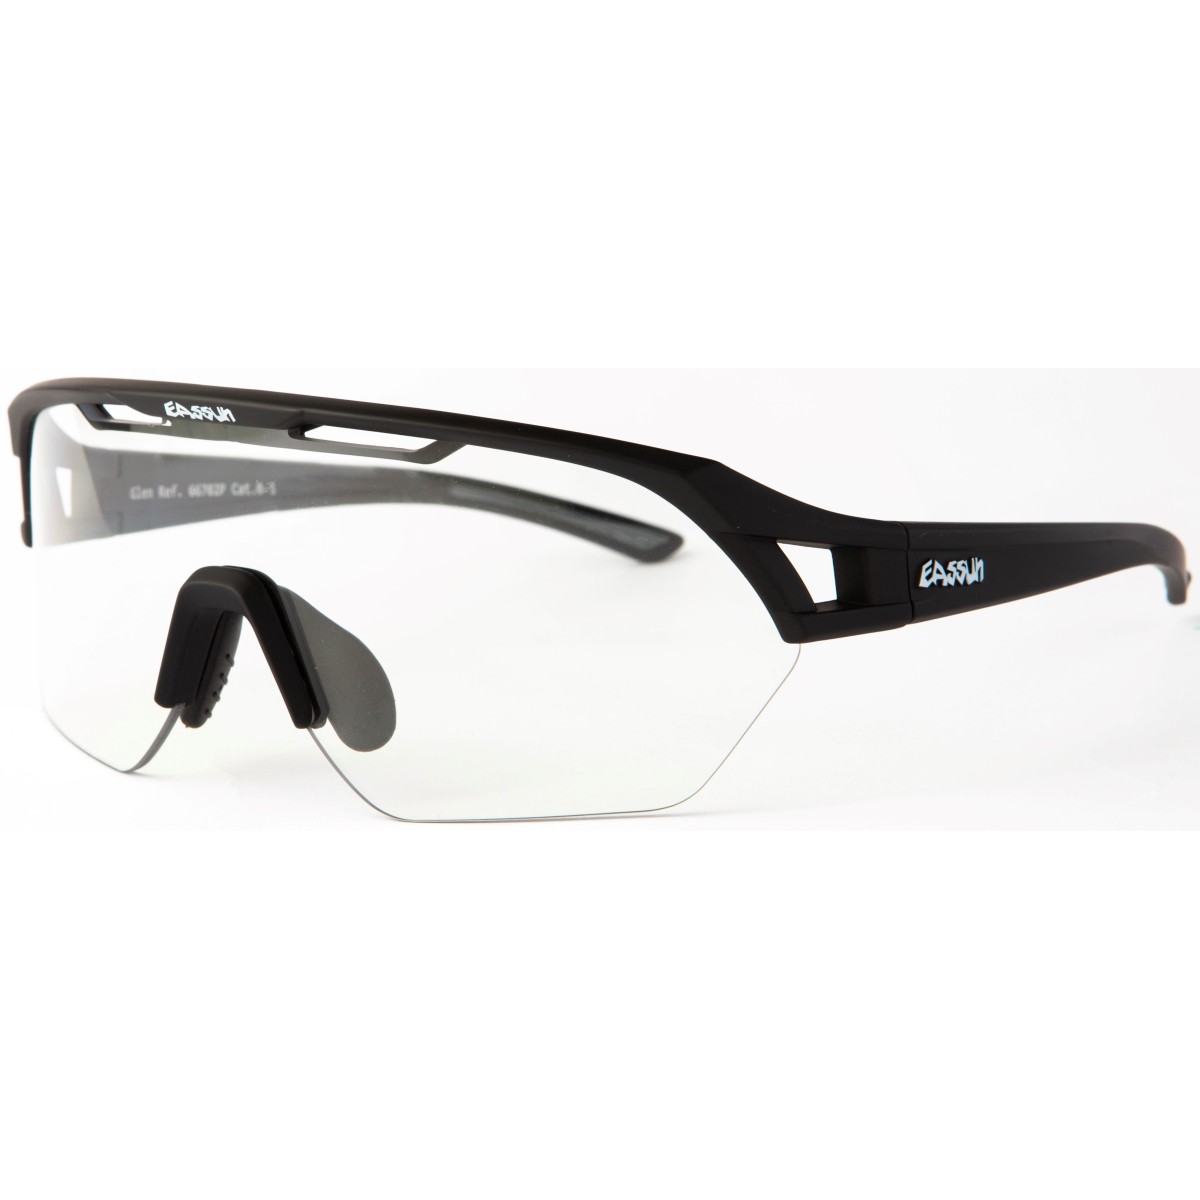 Glen EASSUN Golf Sunglasses, Photochromic, Anti-Slip and Adjustable with  Ventilation System